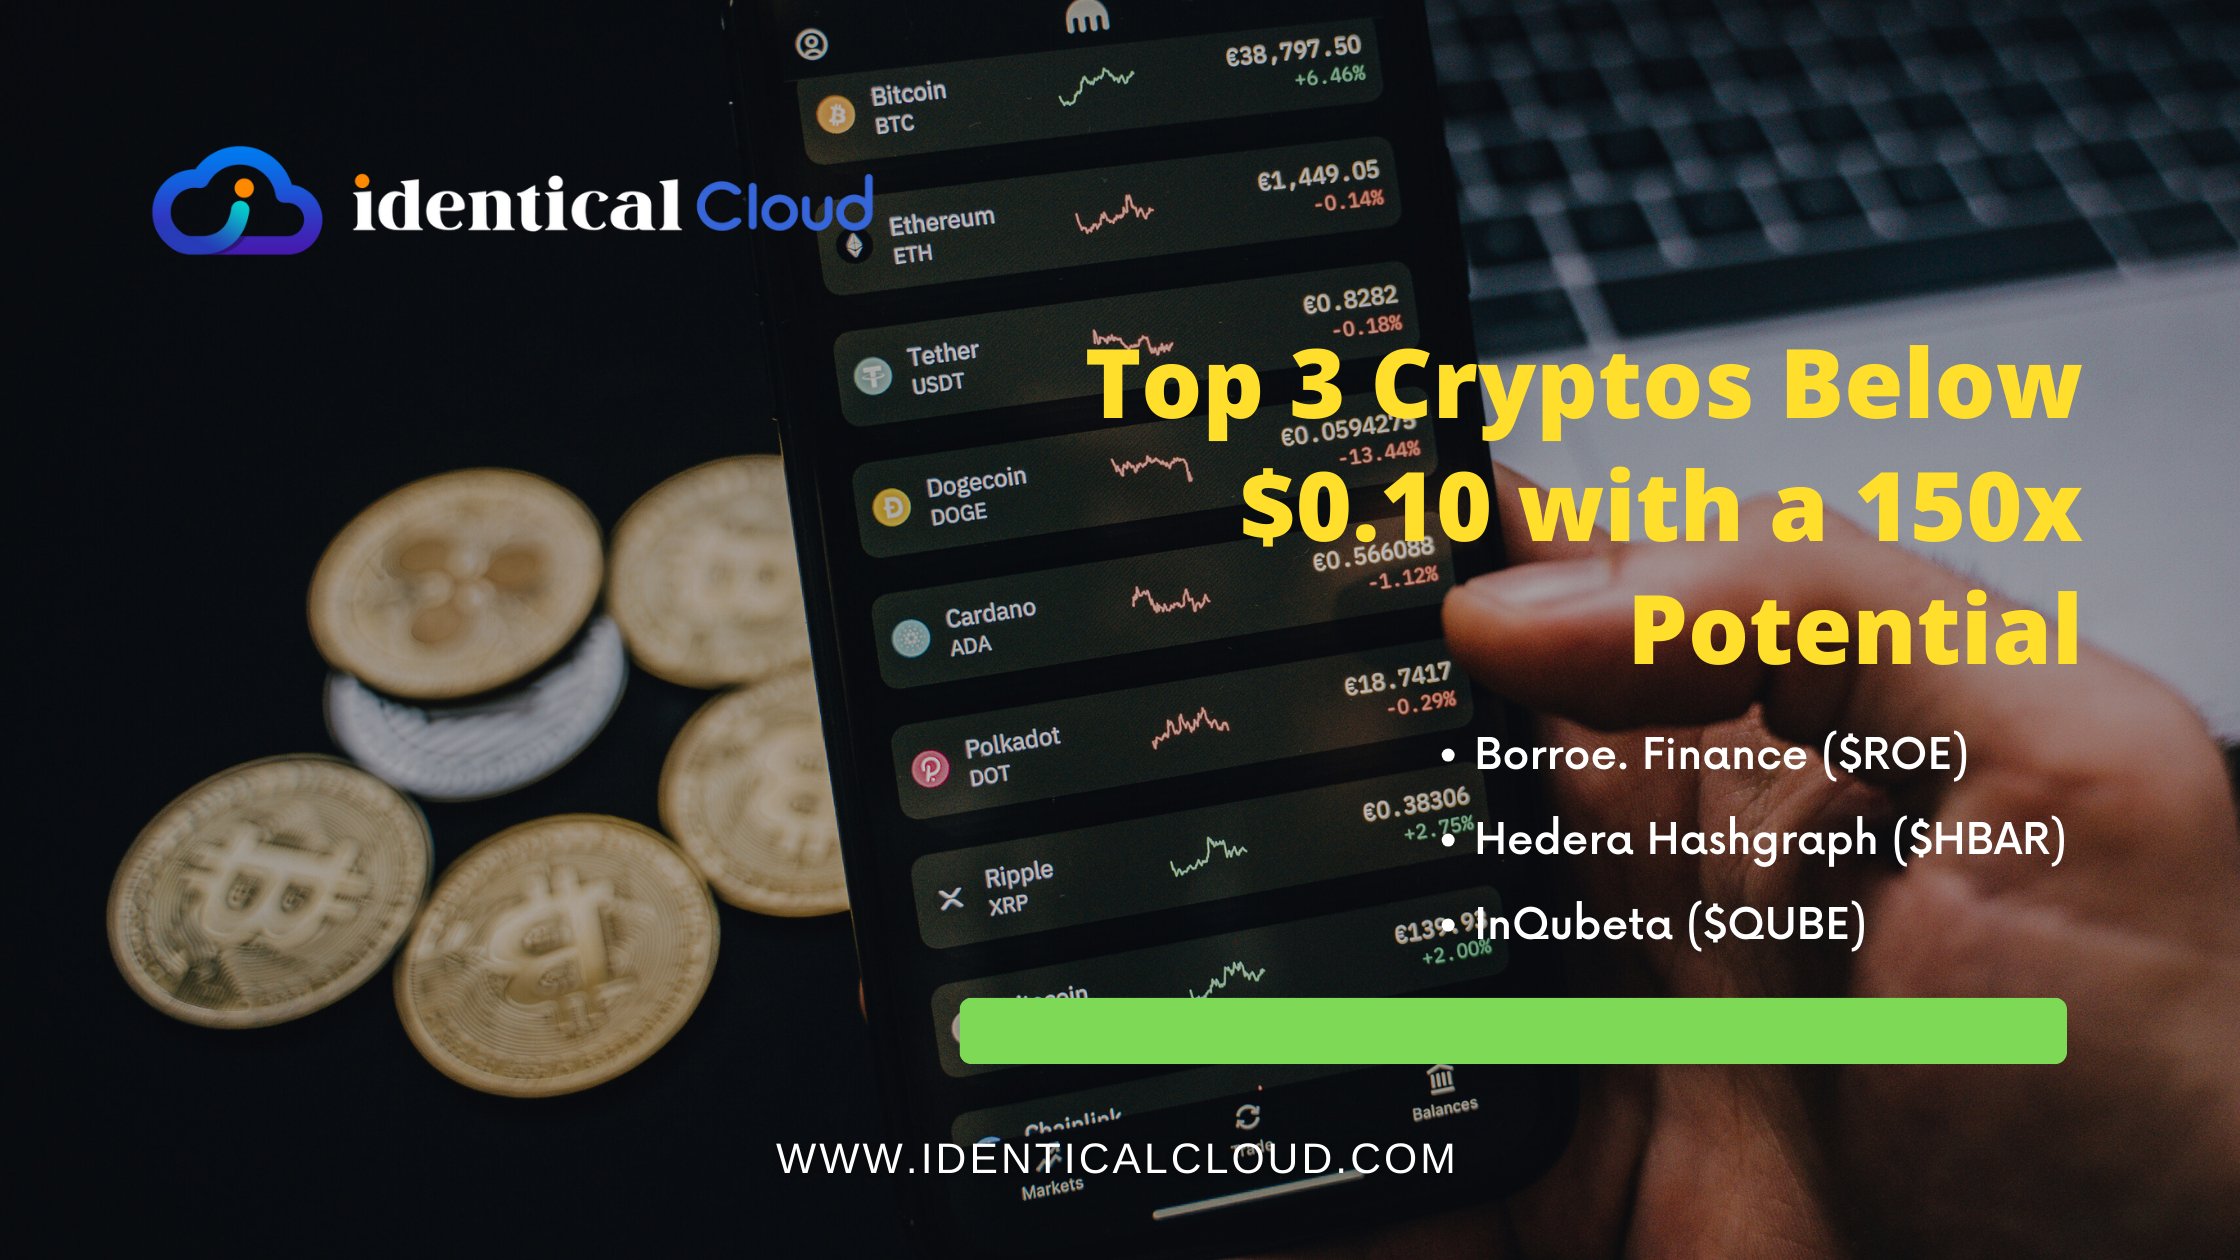 Top 3 Cryptos Below $0.10 with a 150x Potential - identicalcloud.com